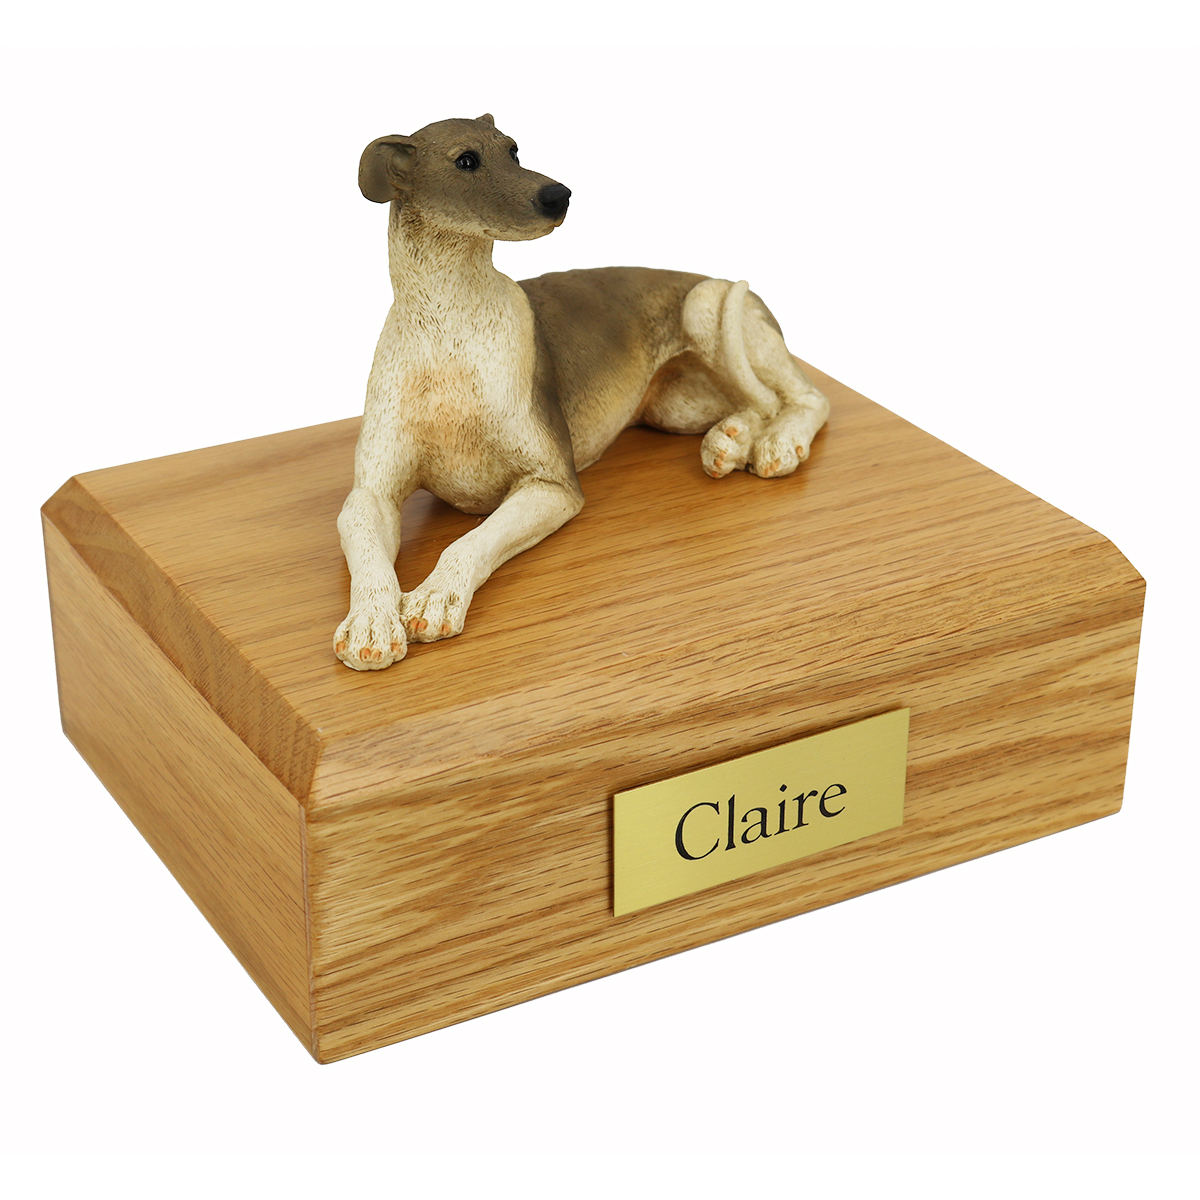 Dog, Greyhound - Figurine Urn